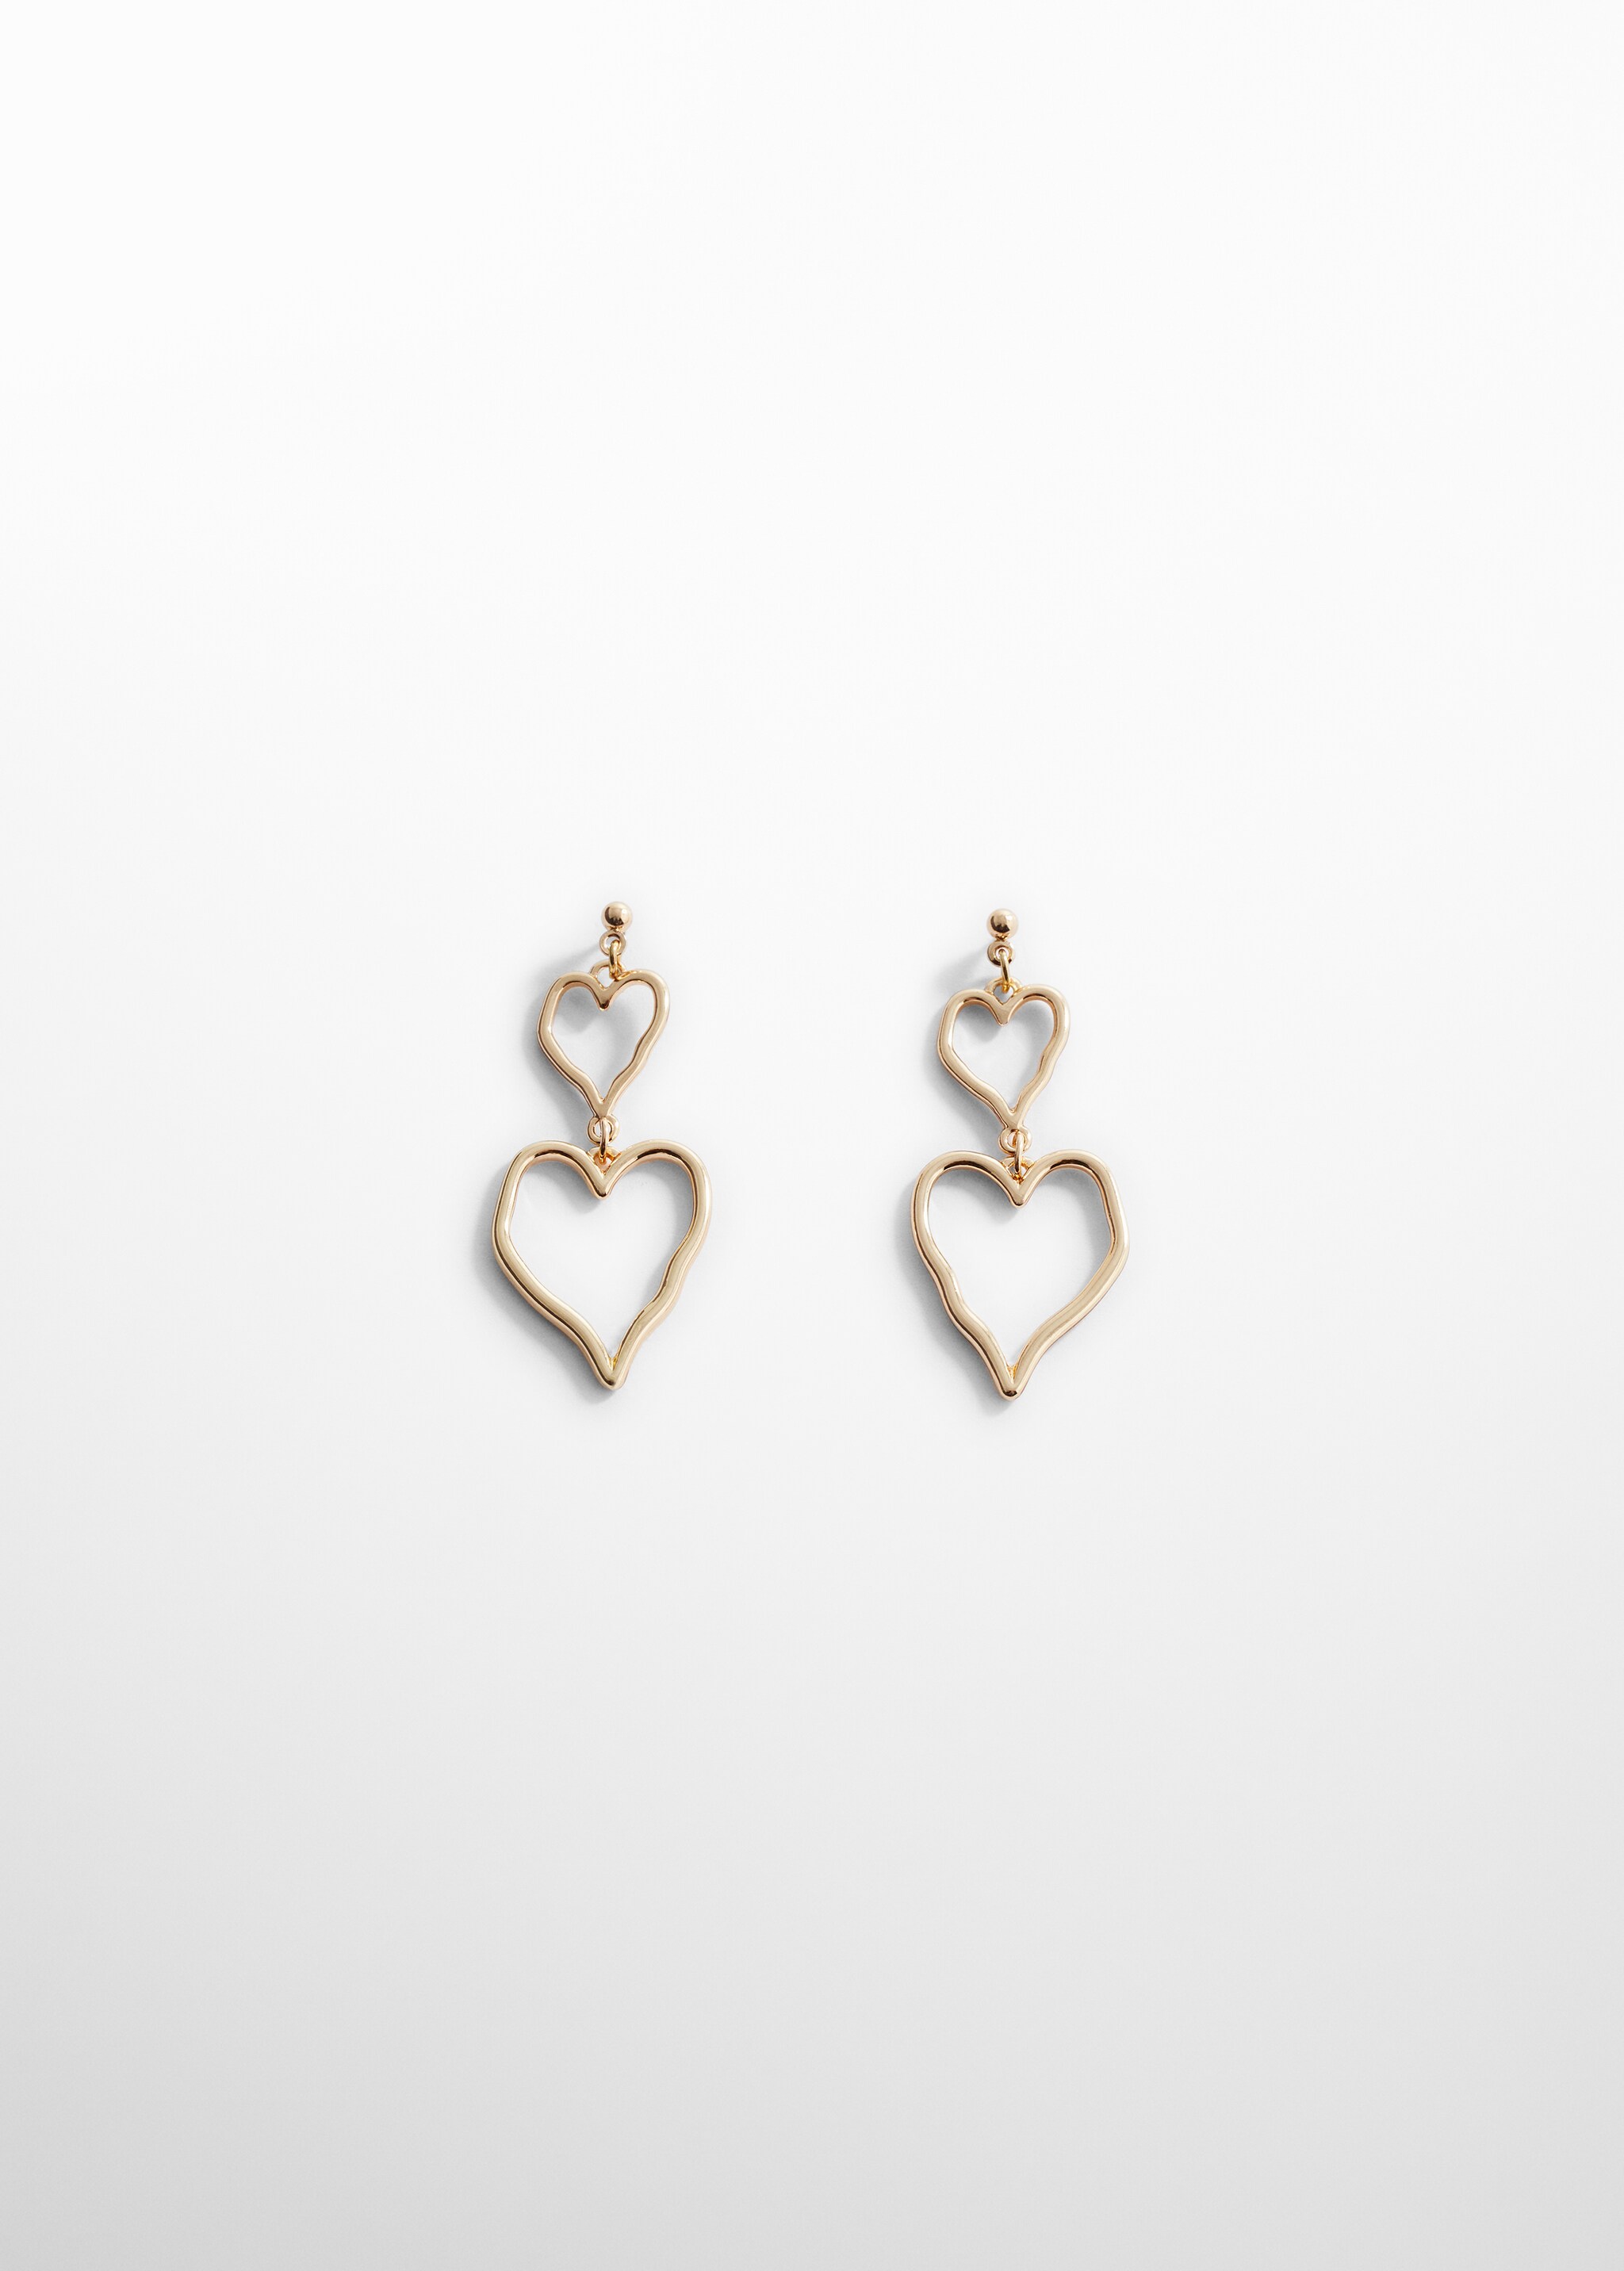 Heart earrings - Article without model